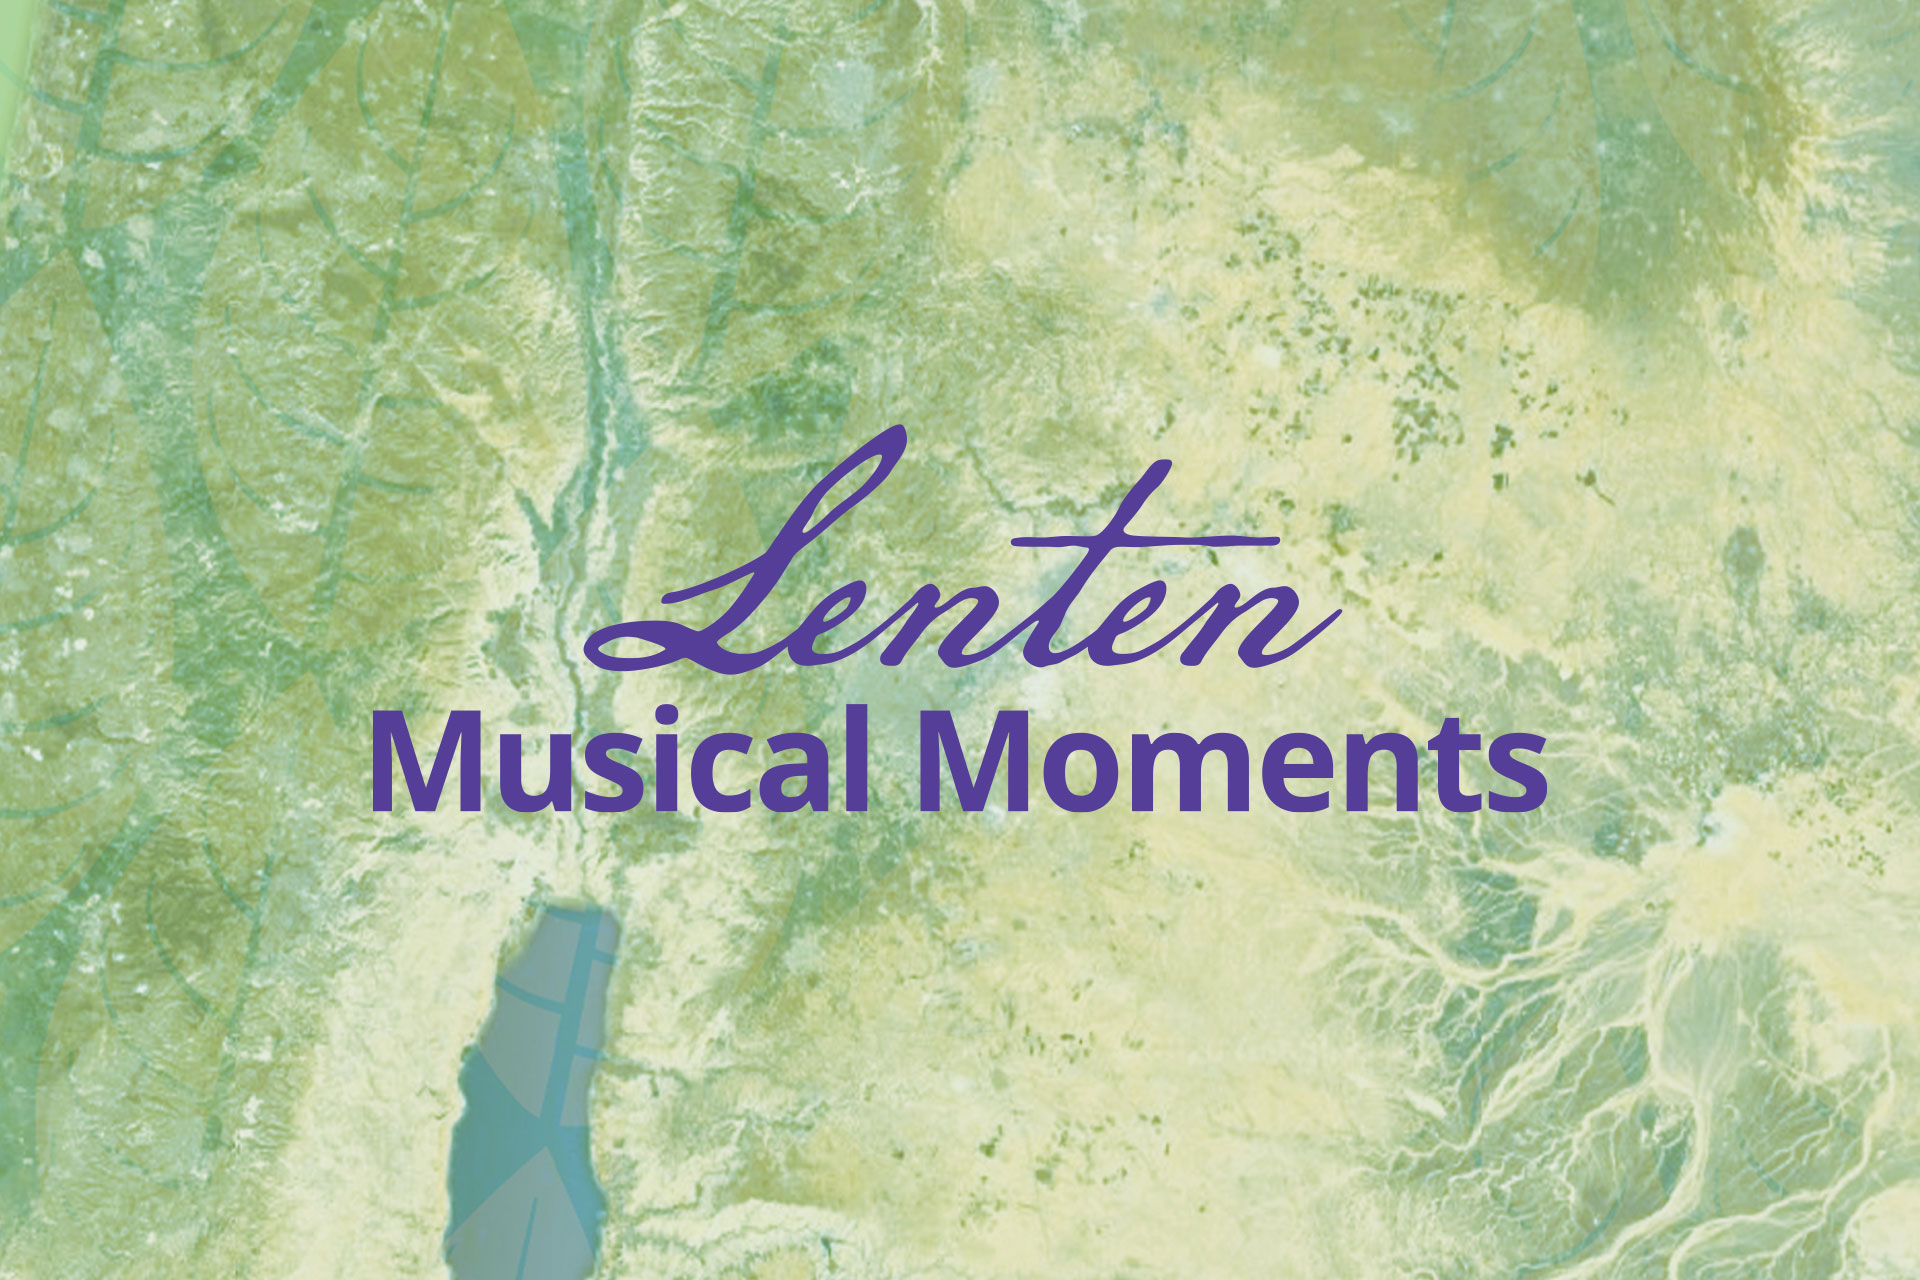 Congregational Church of New Canaan presents Lenten Musical Moments